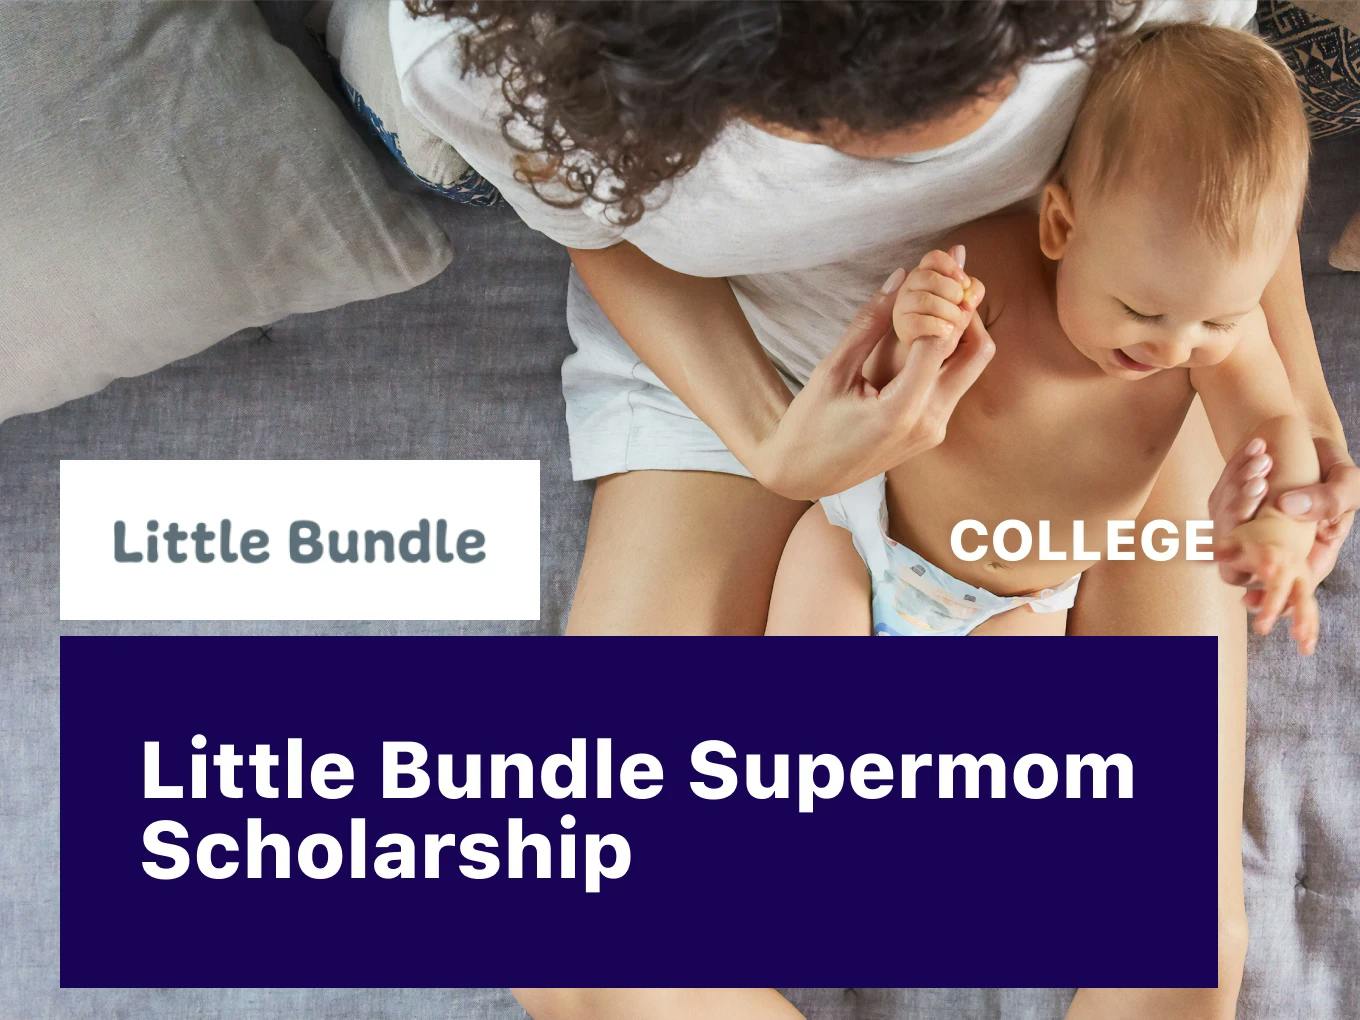 Little Bundle Supermom Scholarship — College Award